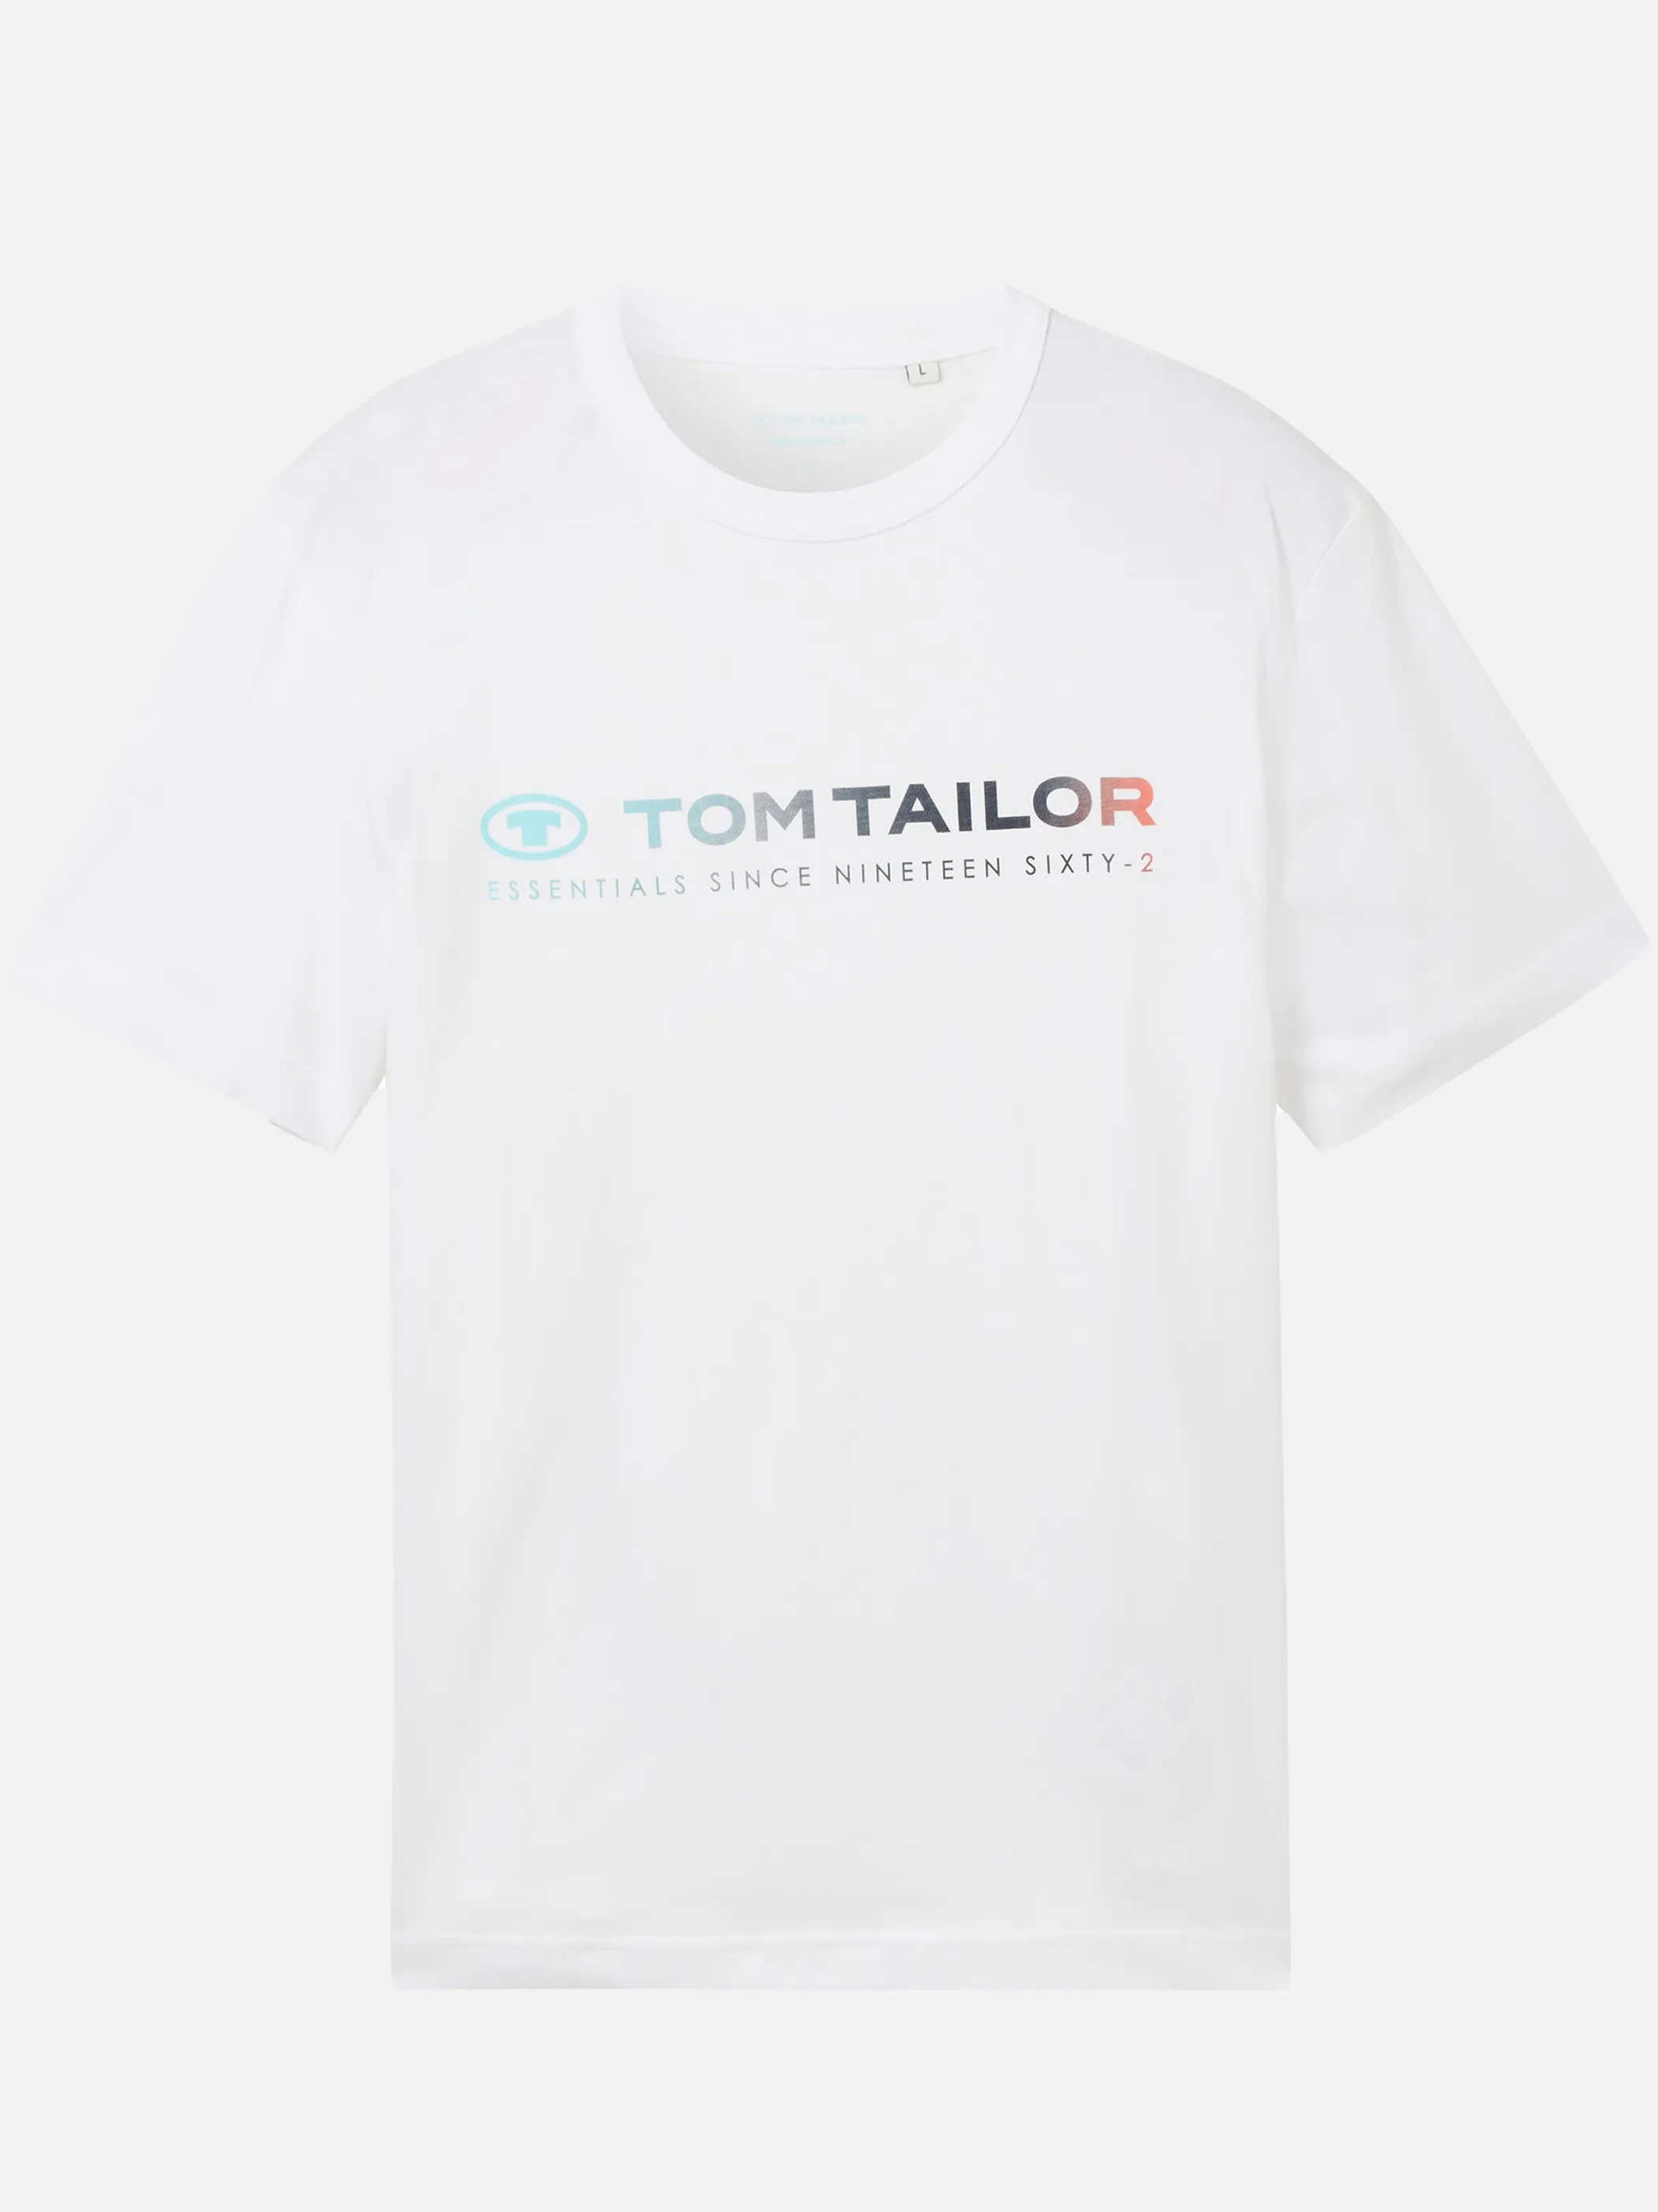 Tom Tailor 1041855 printed t-shirt Weiß 895629 20000 1